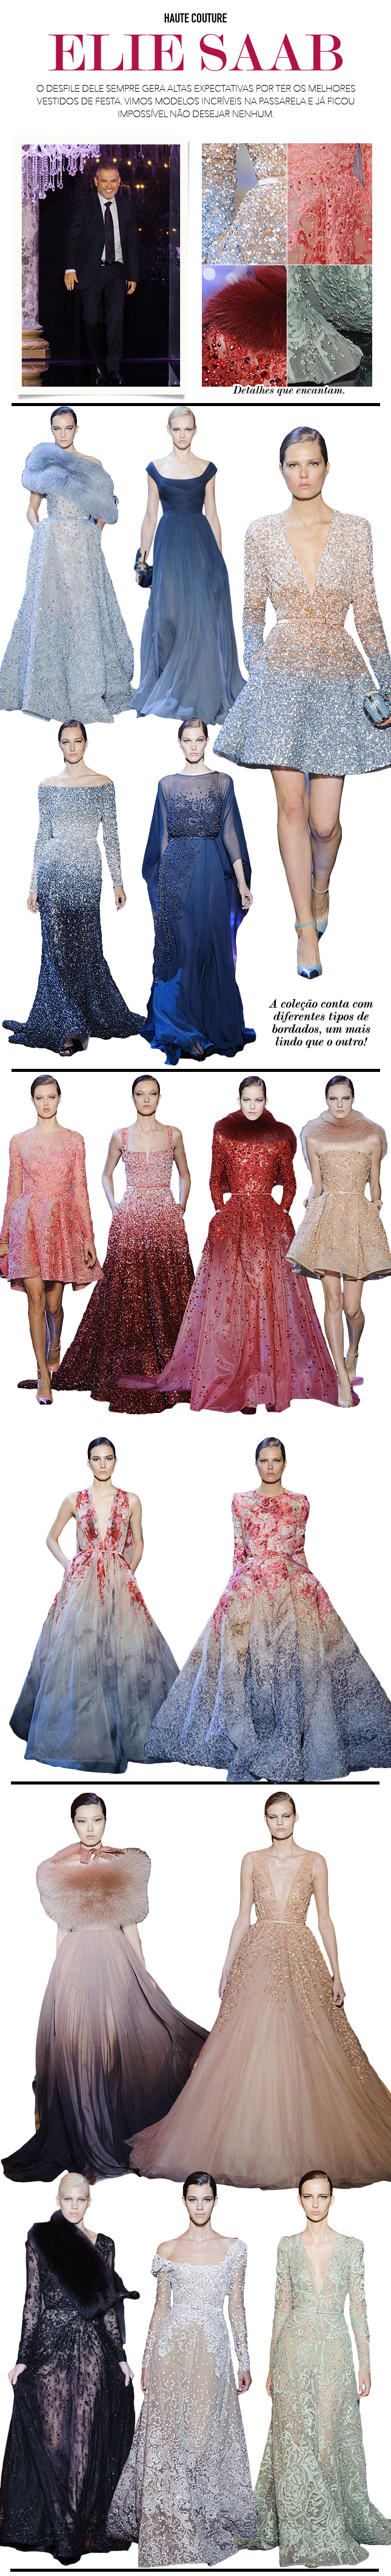 elie saab couture blog de moda oh my closet desfiles haute couture paris elie saab vestido de festa red carpet